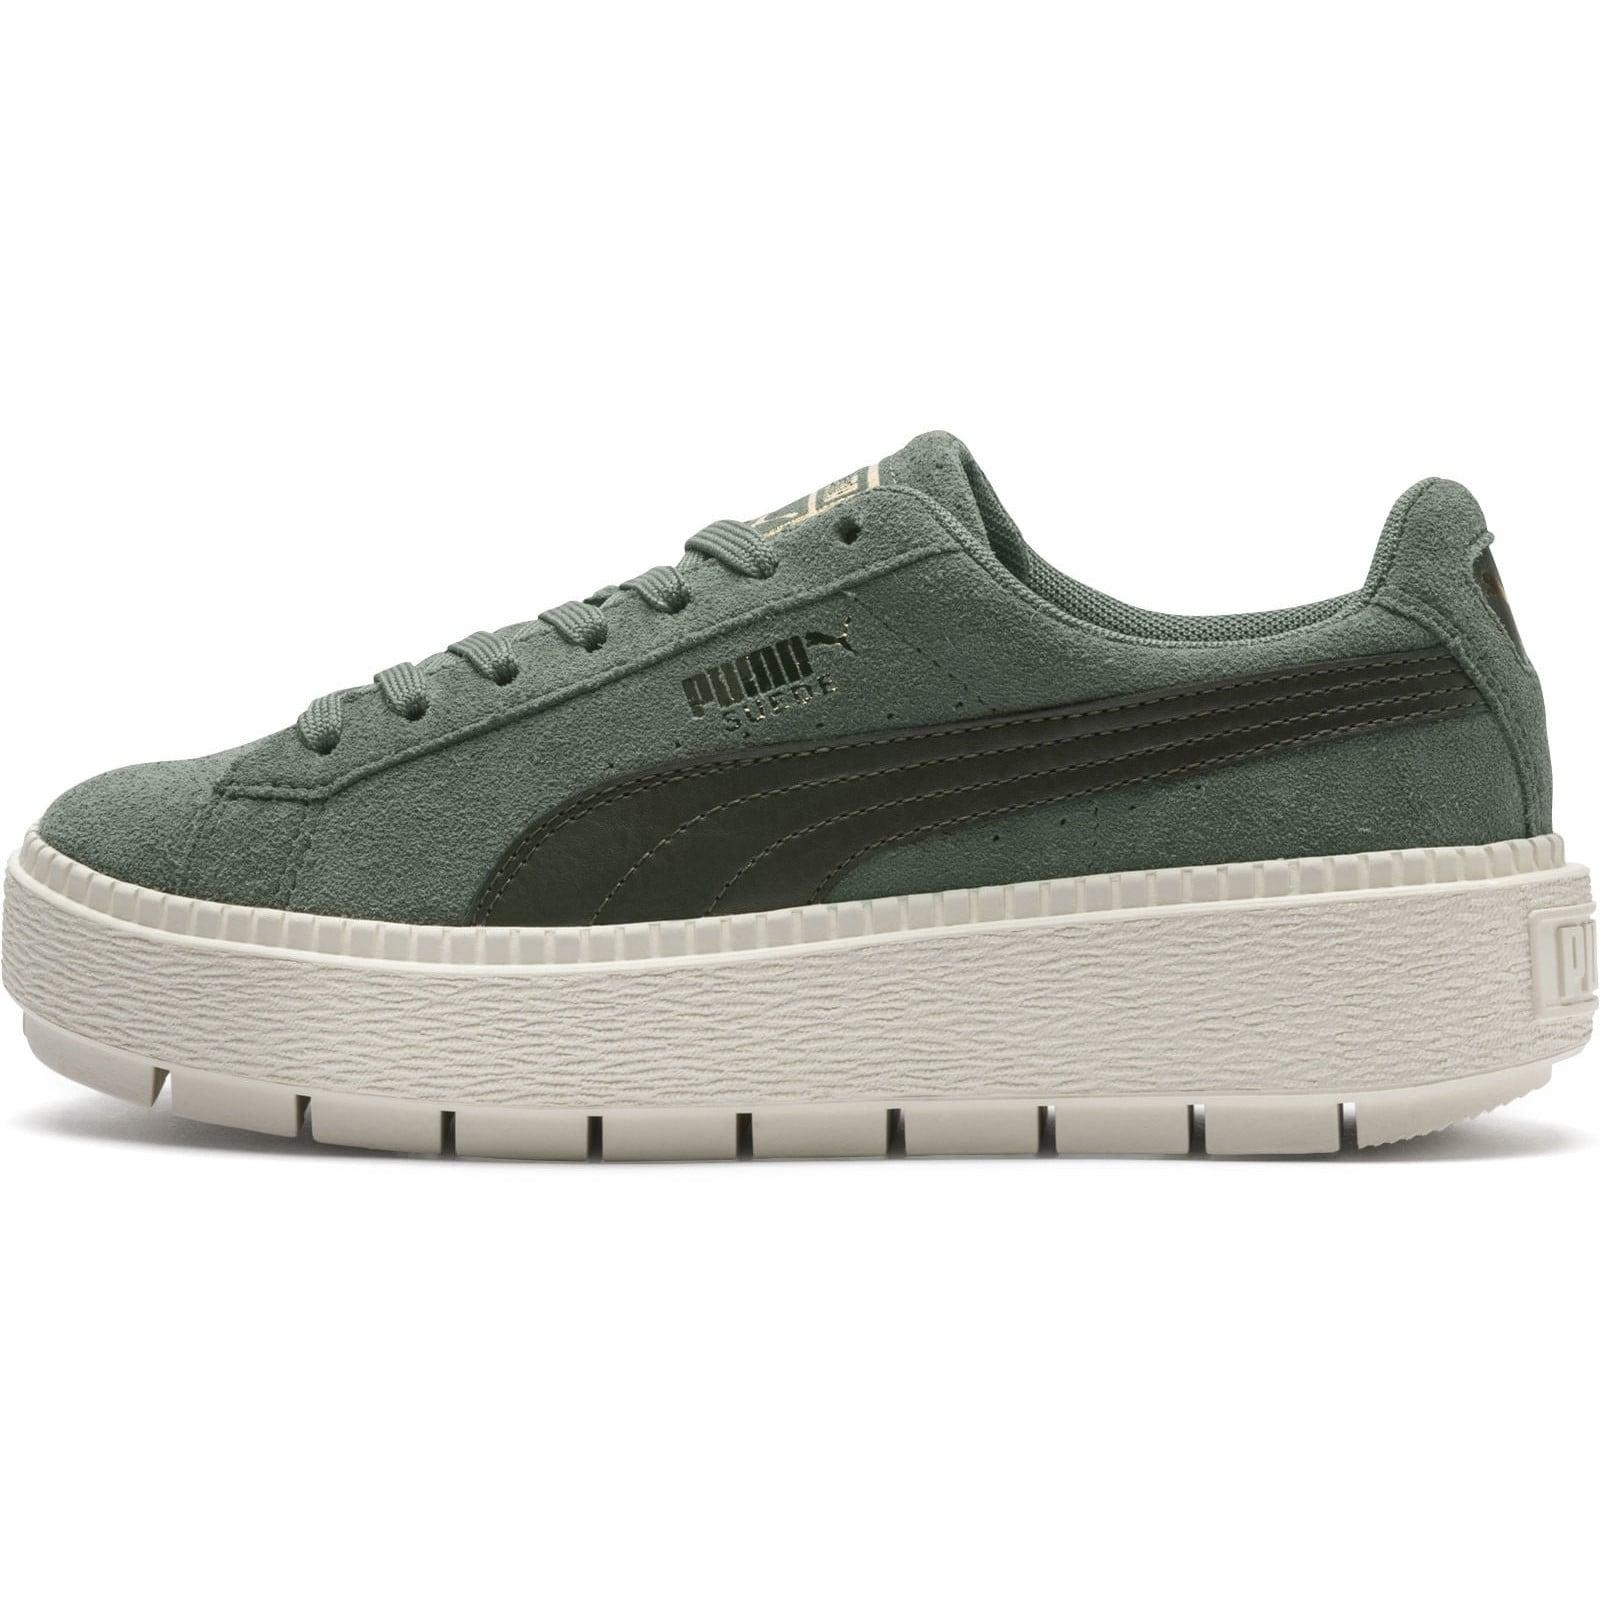 puma green sneakers